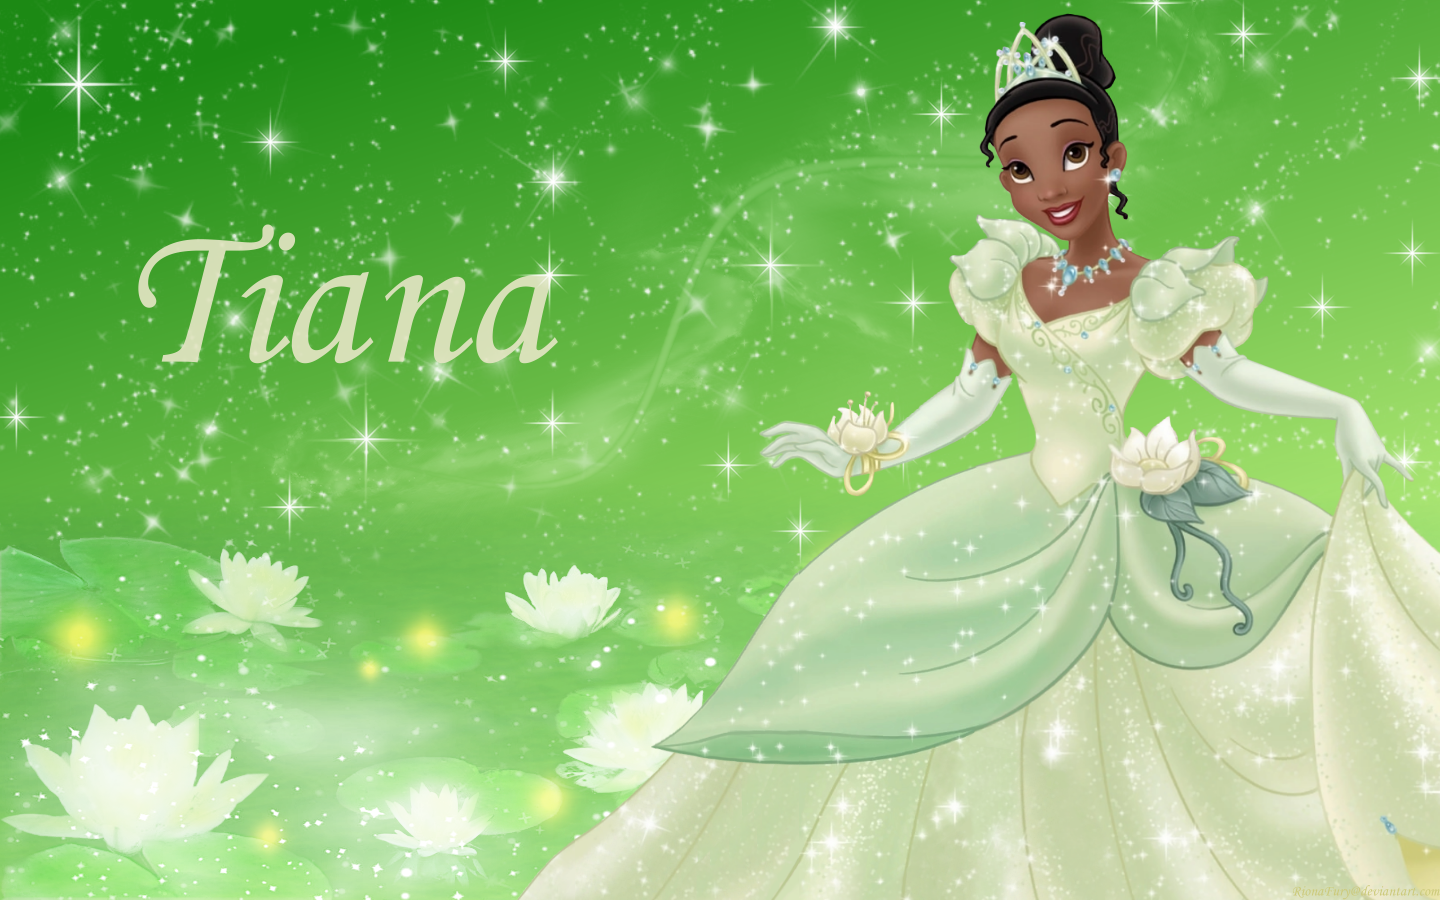 Princess Tiana - The Princess and the Frog Wallpaper 23744467